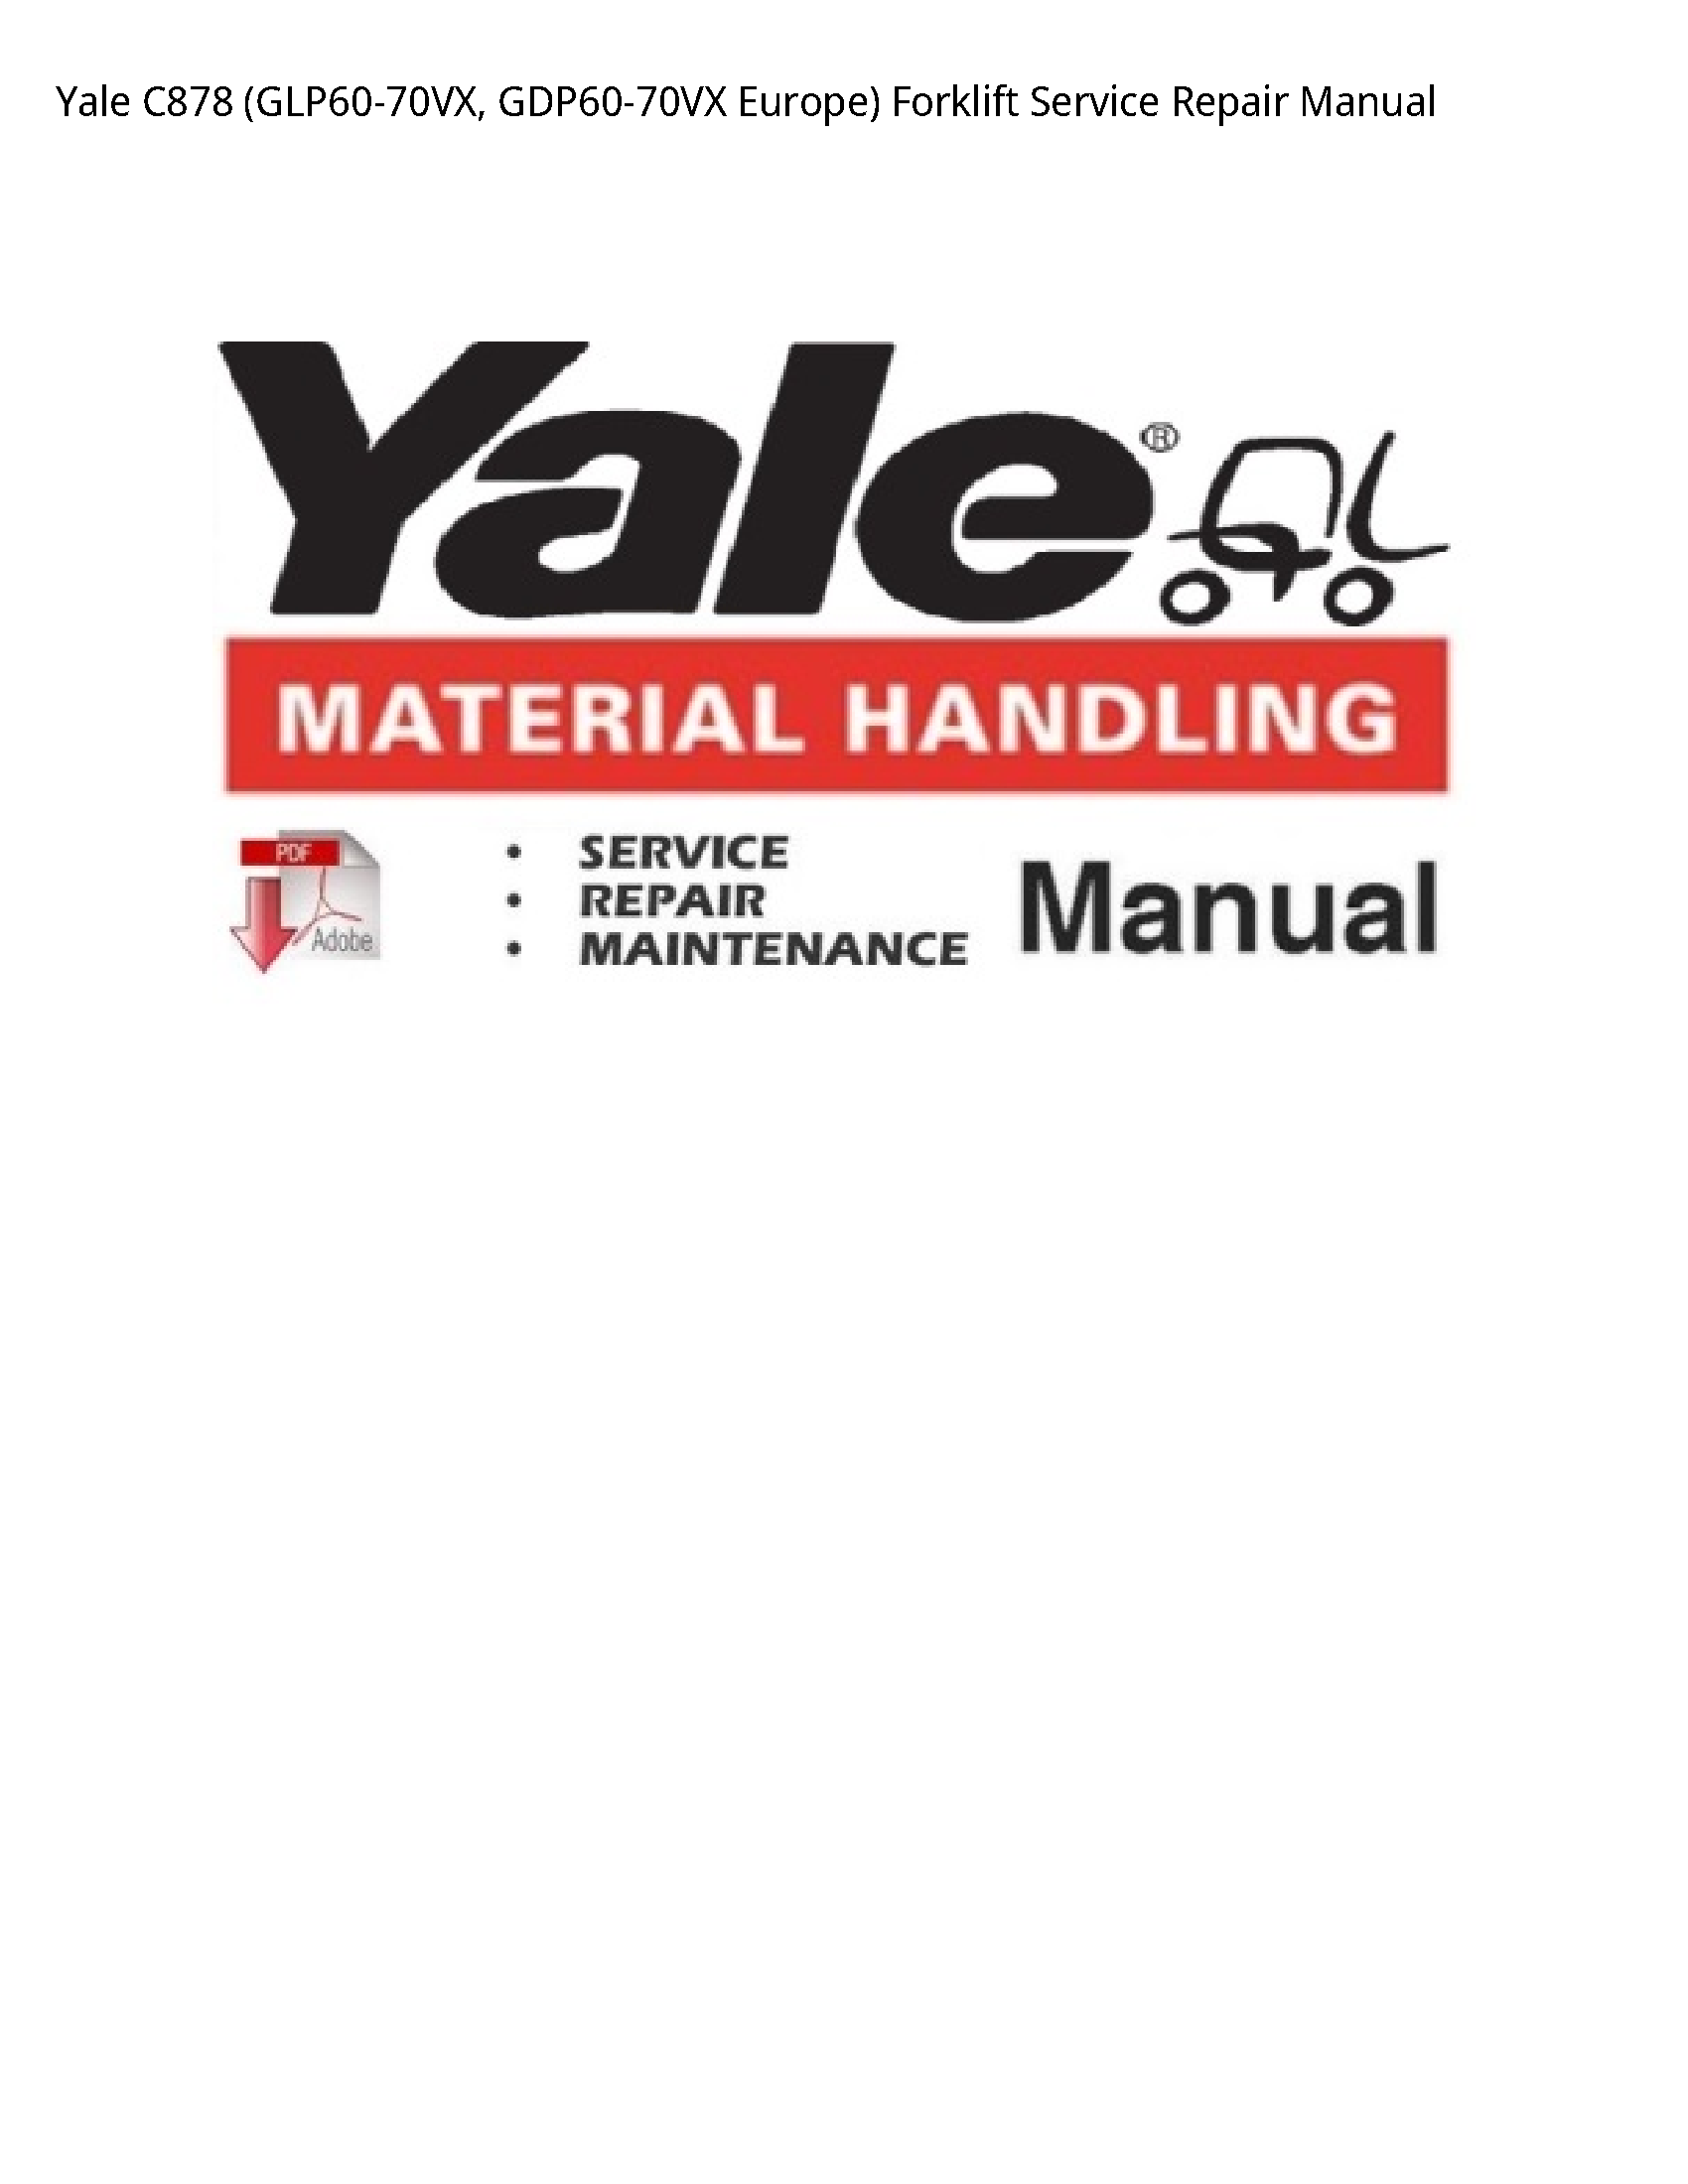 Yale C878 Europe) Forklift manual